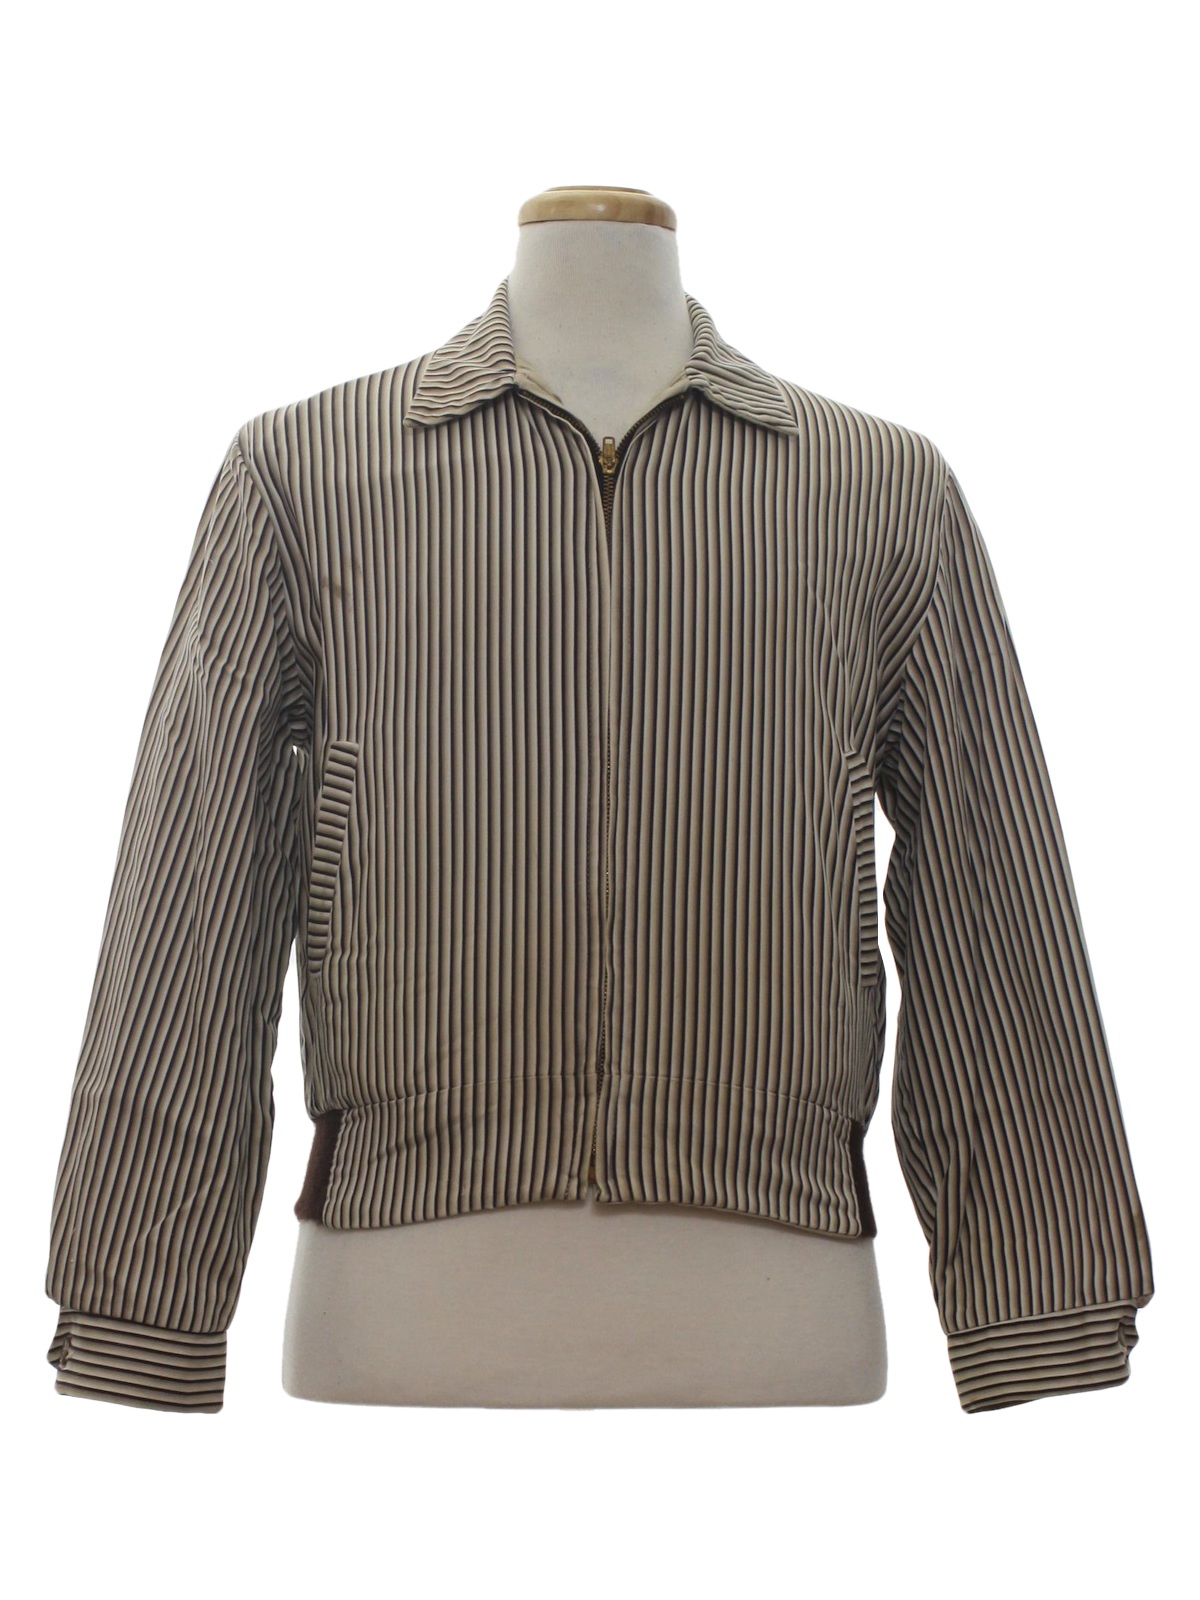 Retro 50s Jacket: 50s -No Label- Mens white background, black